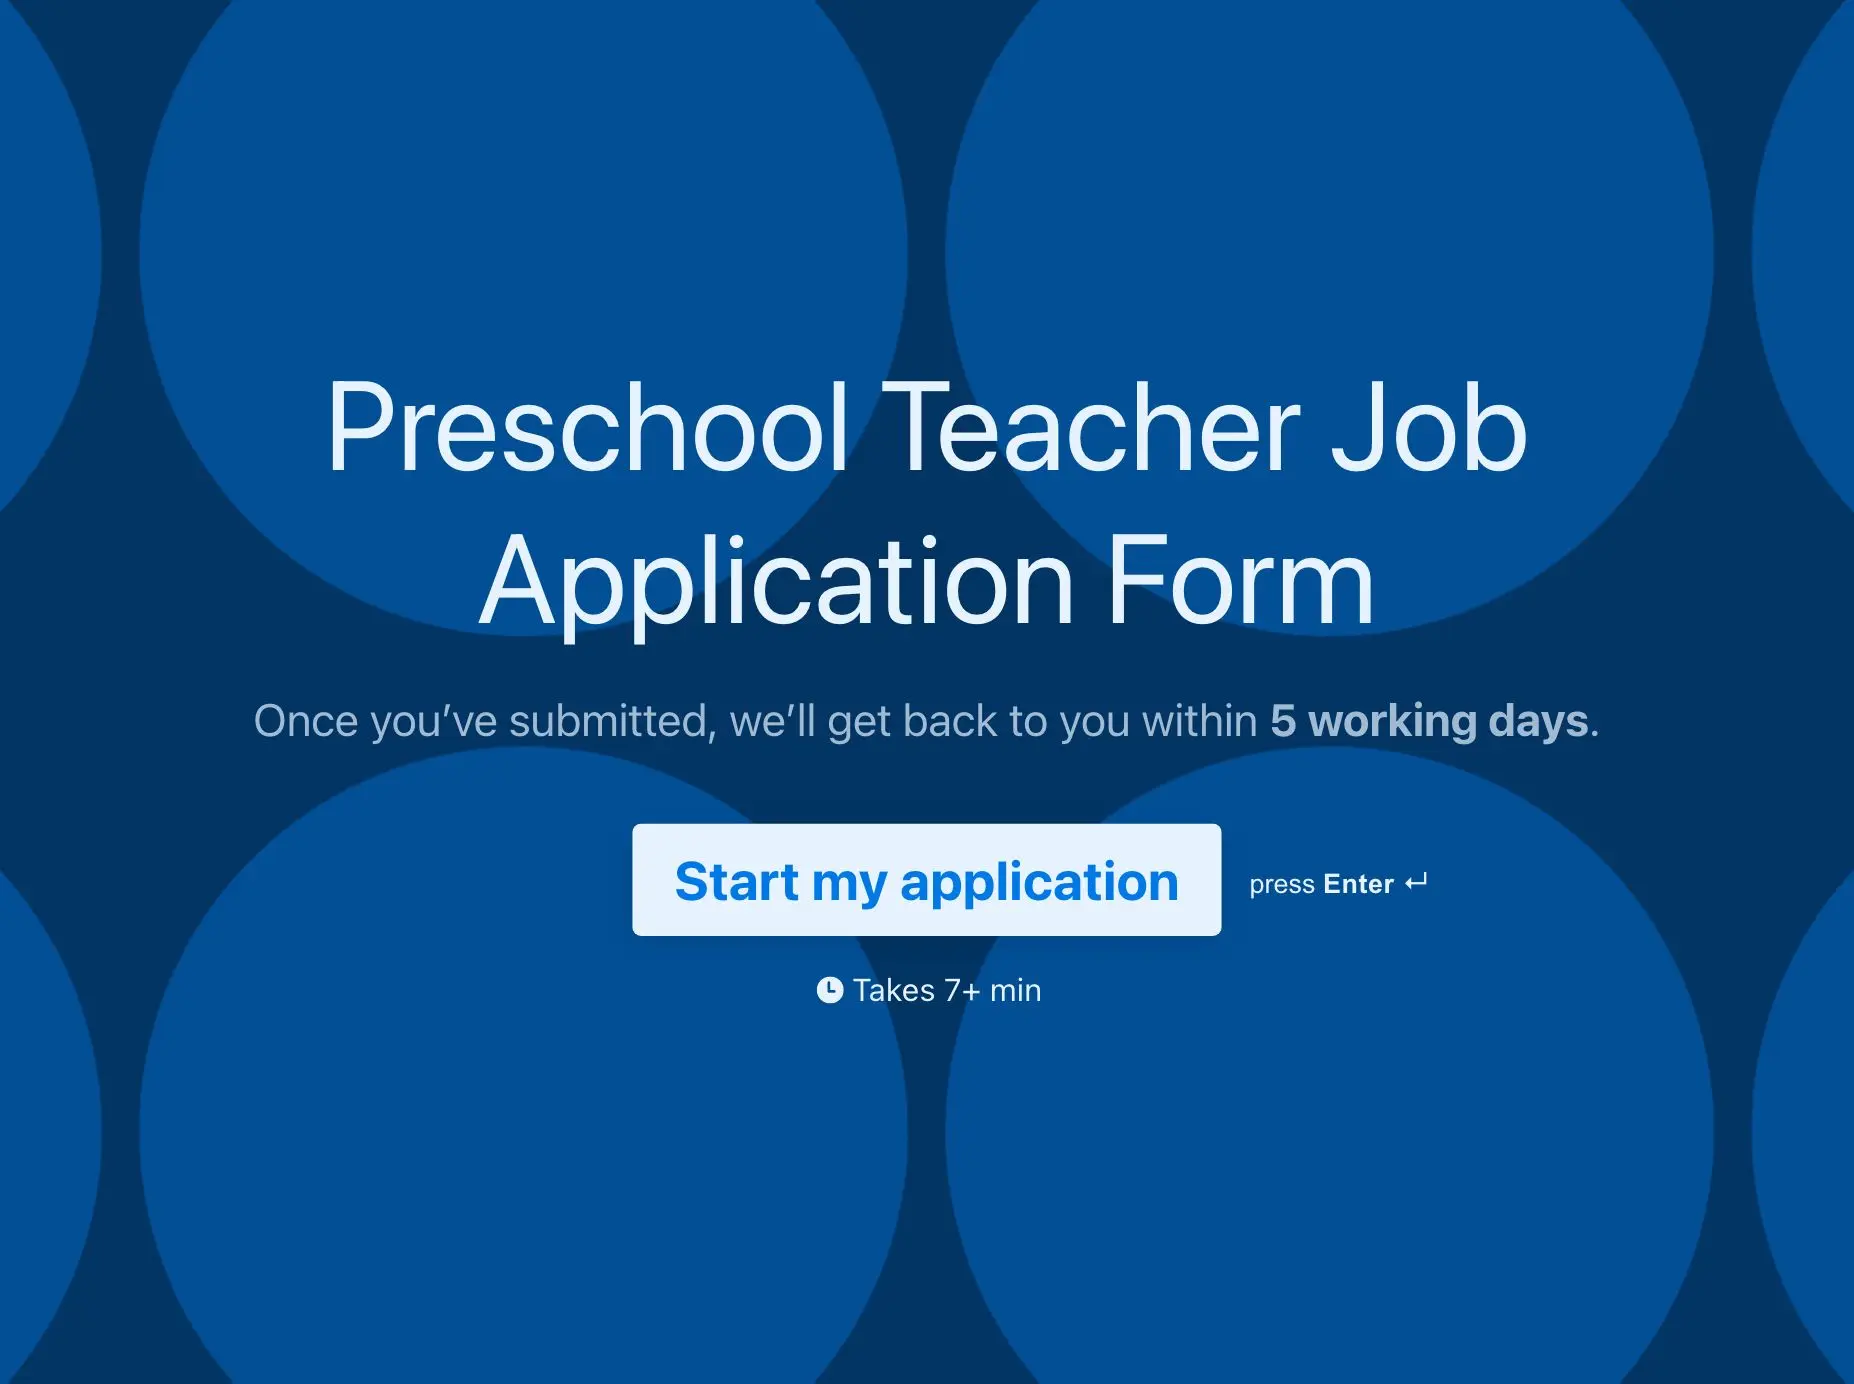 Preschool Teacher Job Application Form Template Hero